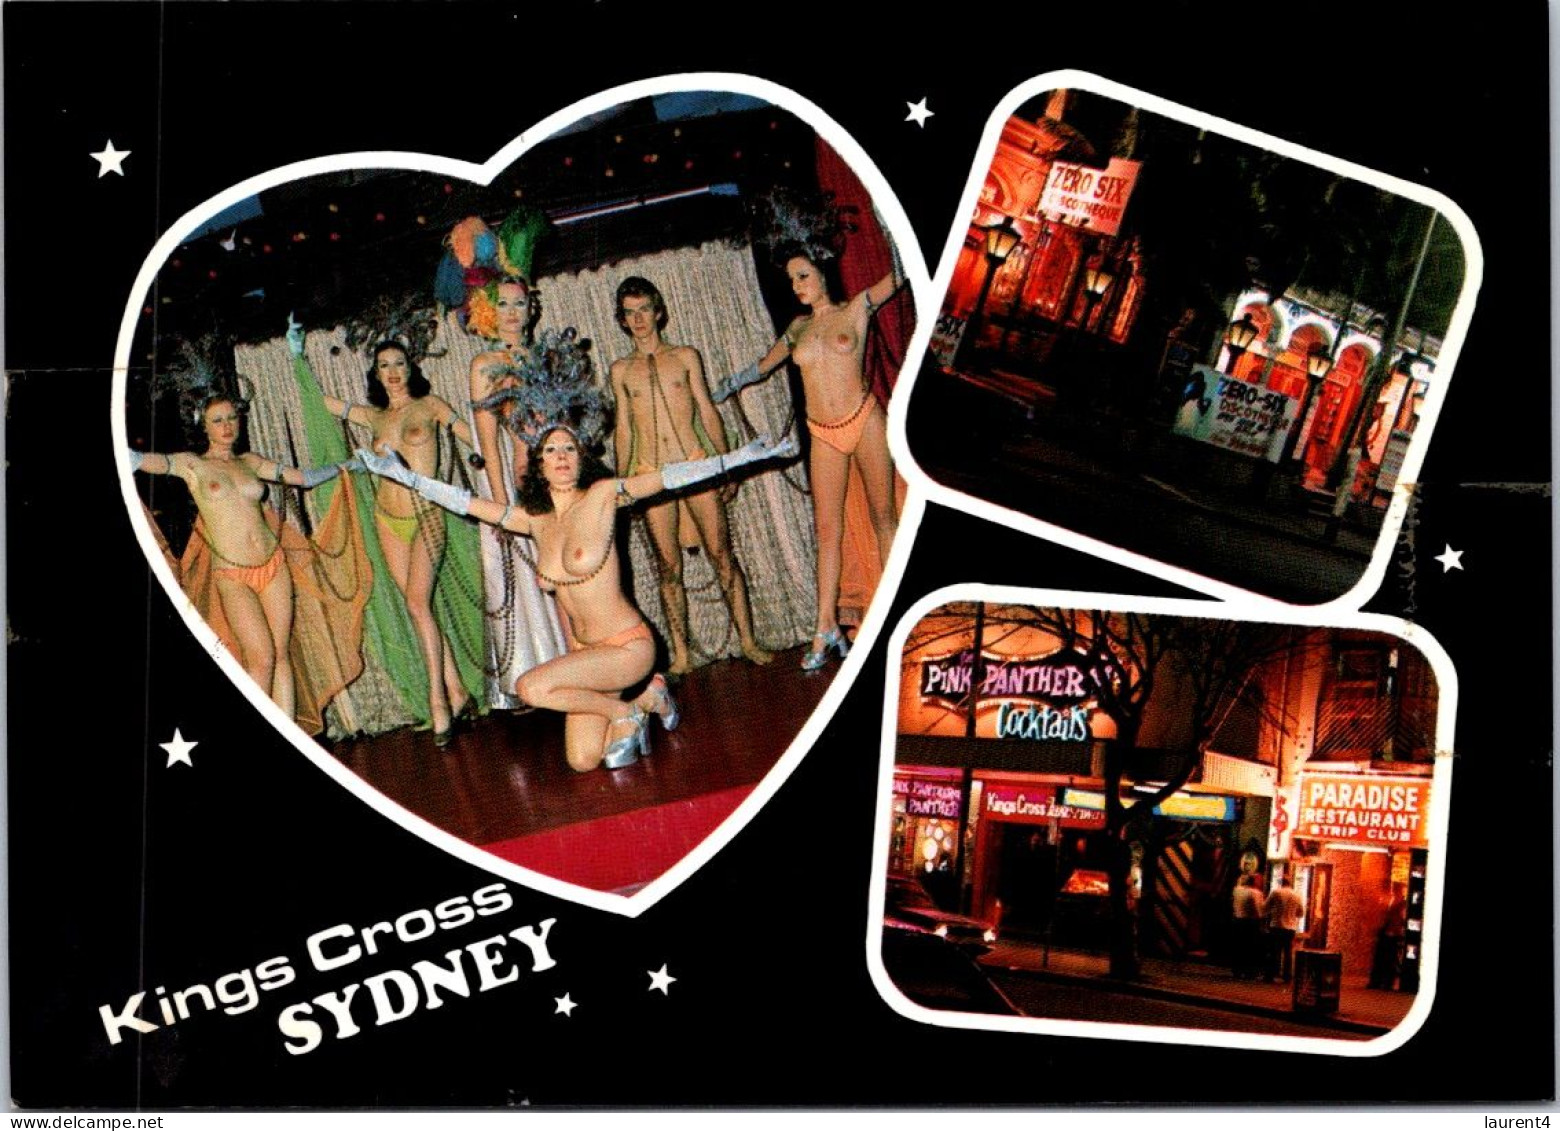 6-3-2025 (2 Y 16) Australia - NSW - Kings Cross (in Sydney) "red Light" District & Cabarets - Sydney